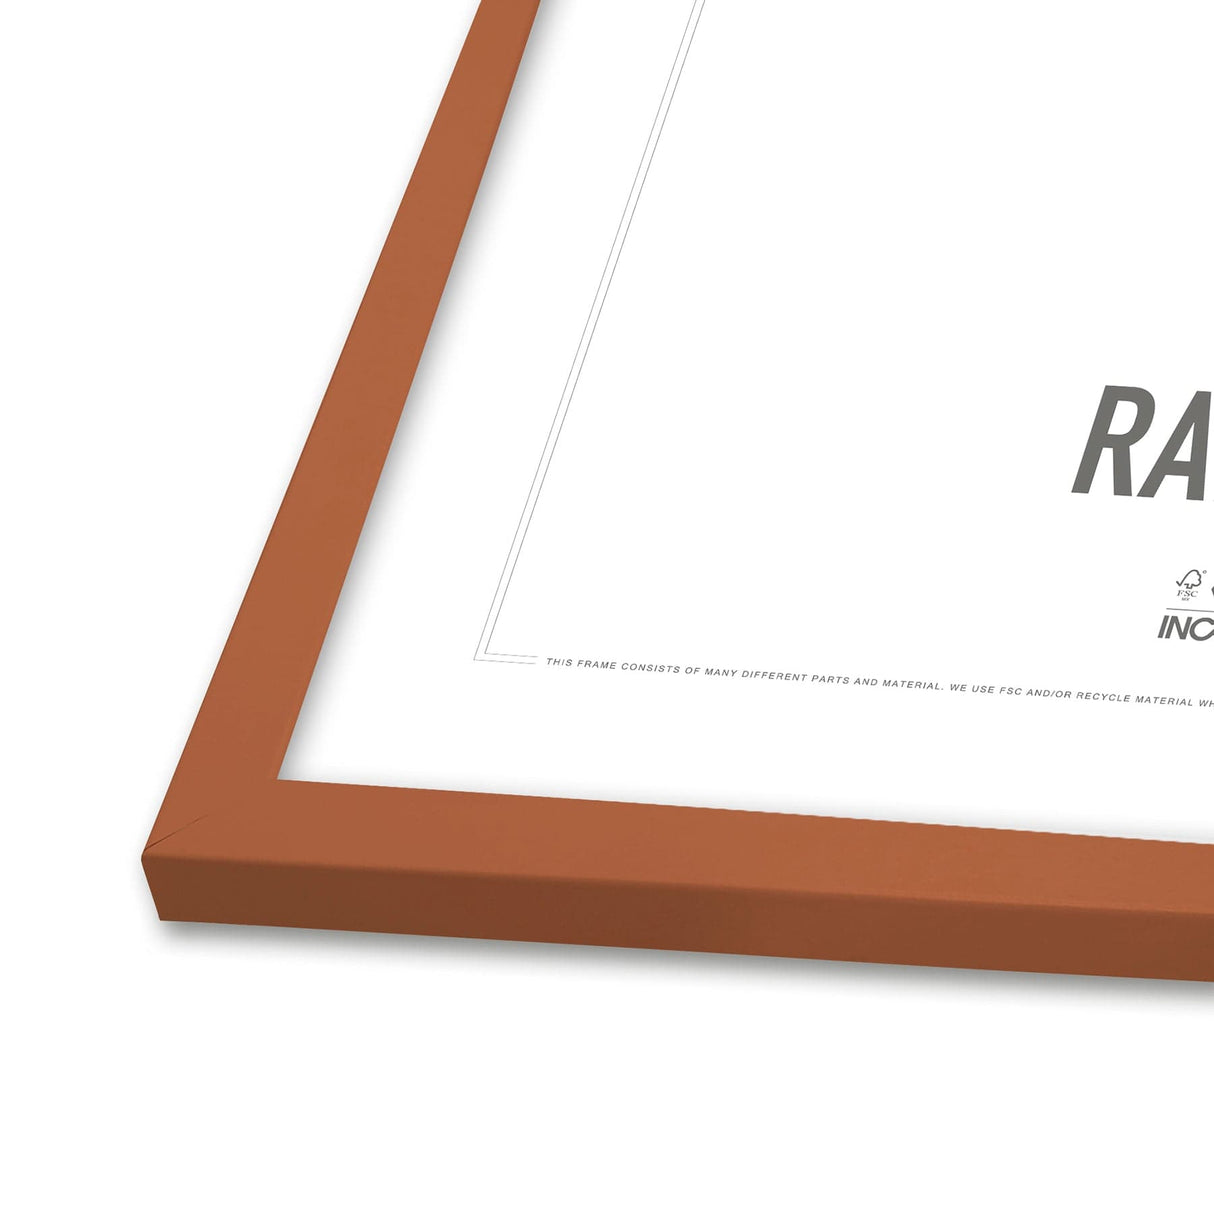 Rust Rødlig Ramme - Incado NordicLine - 30 x 40 cm